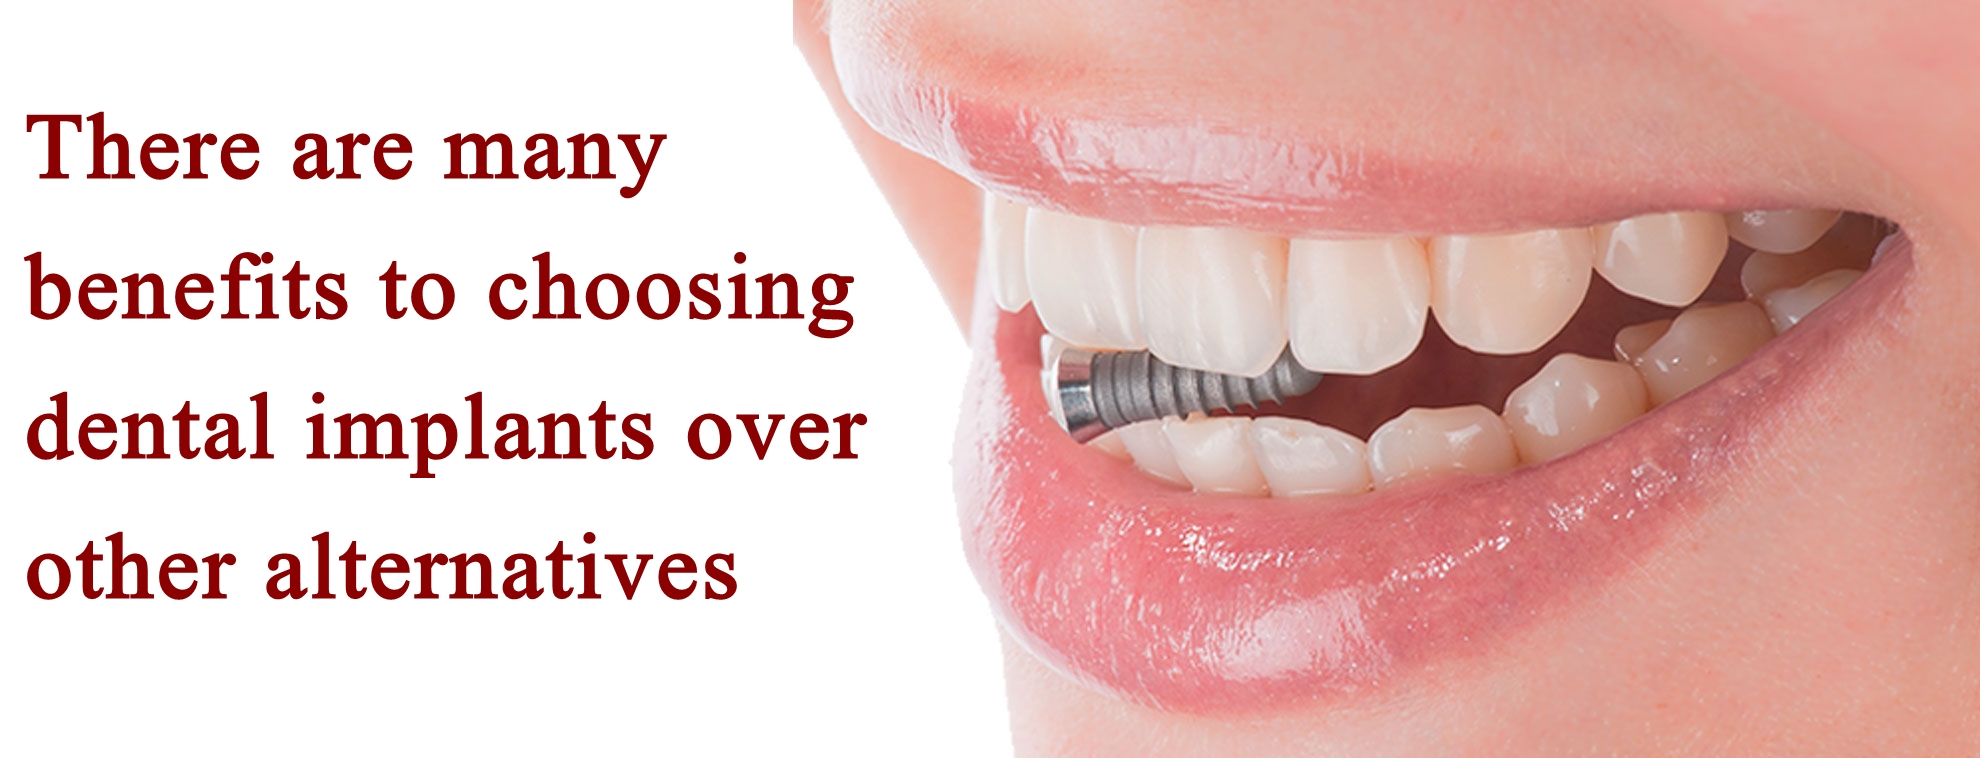 Benefits dental implants